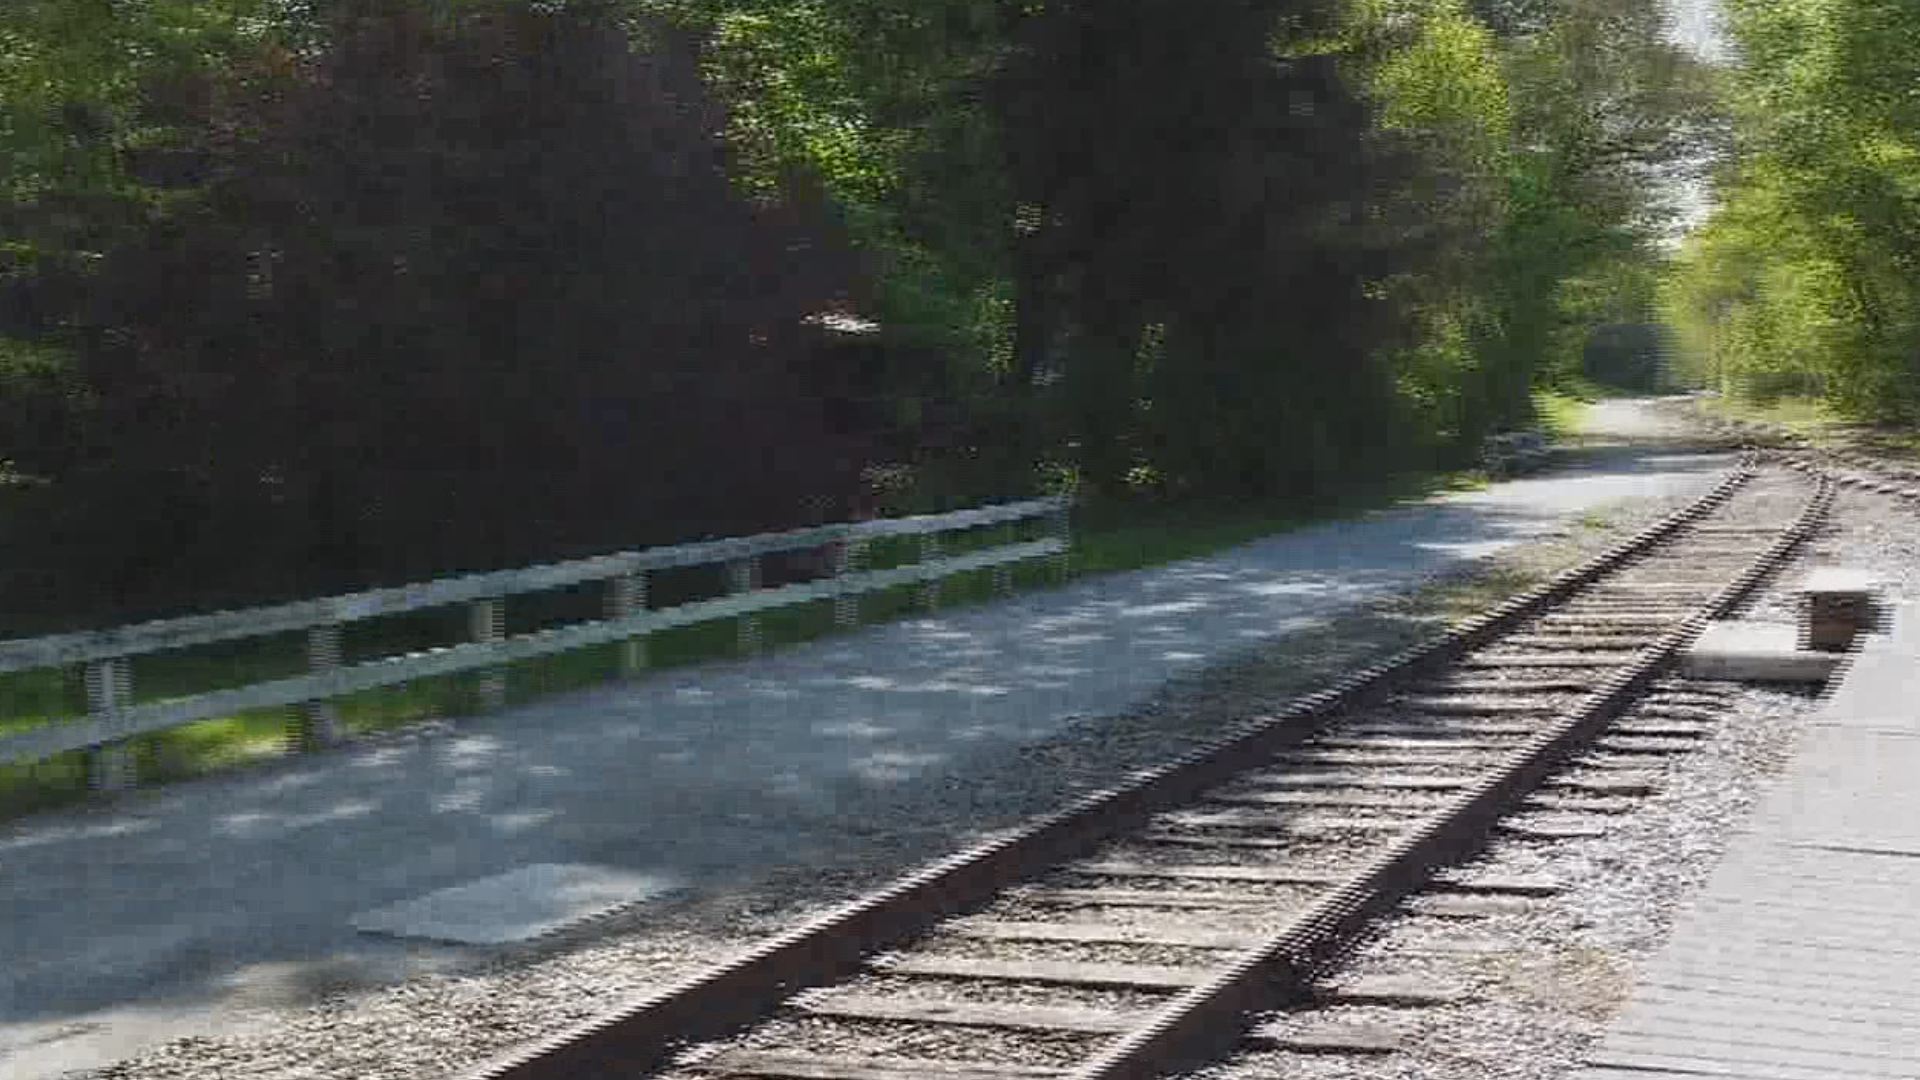 York County Rail Trail Authority